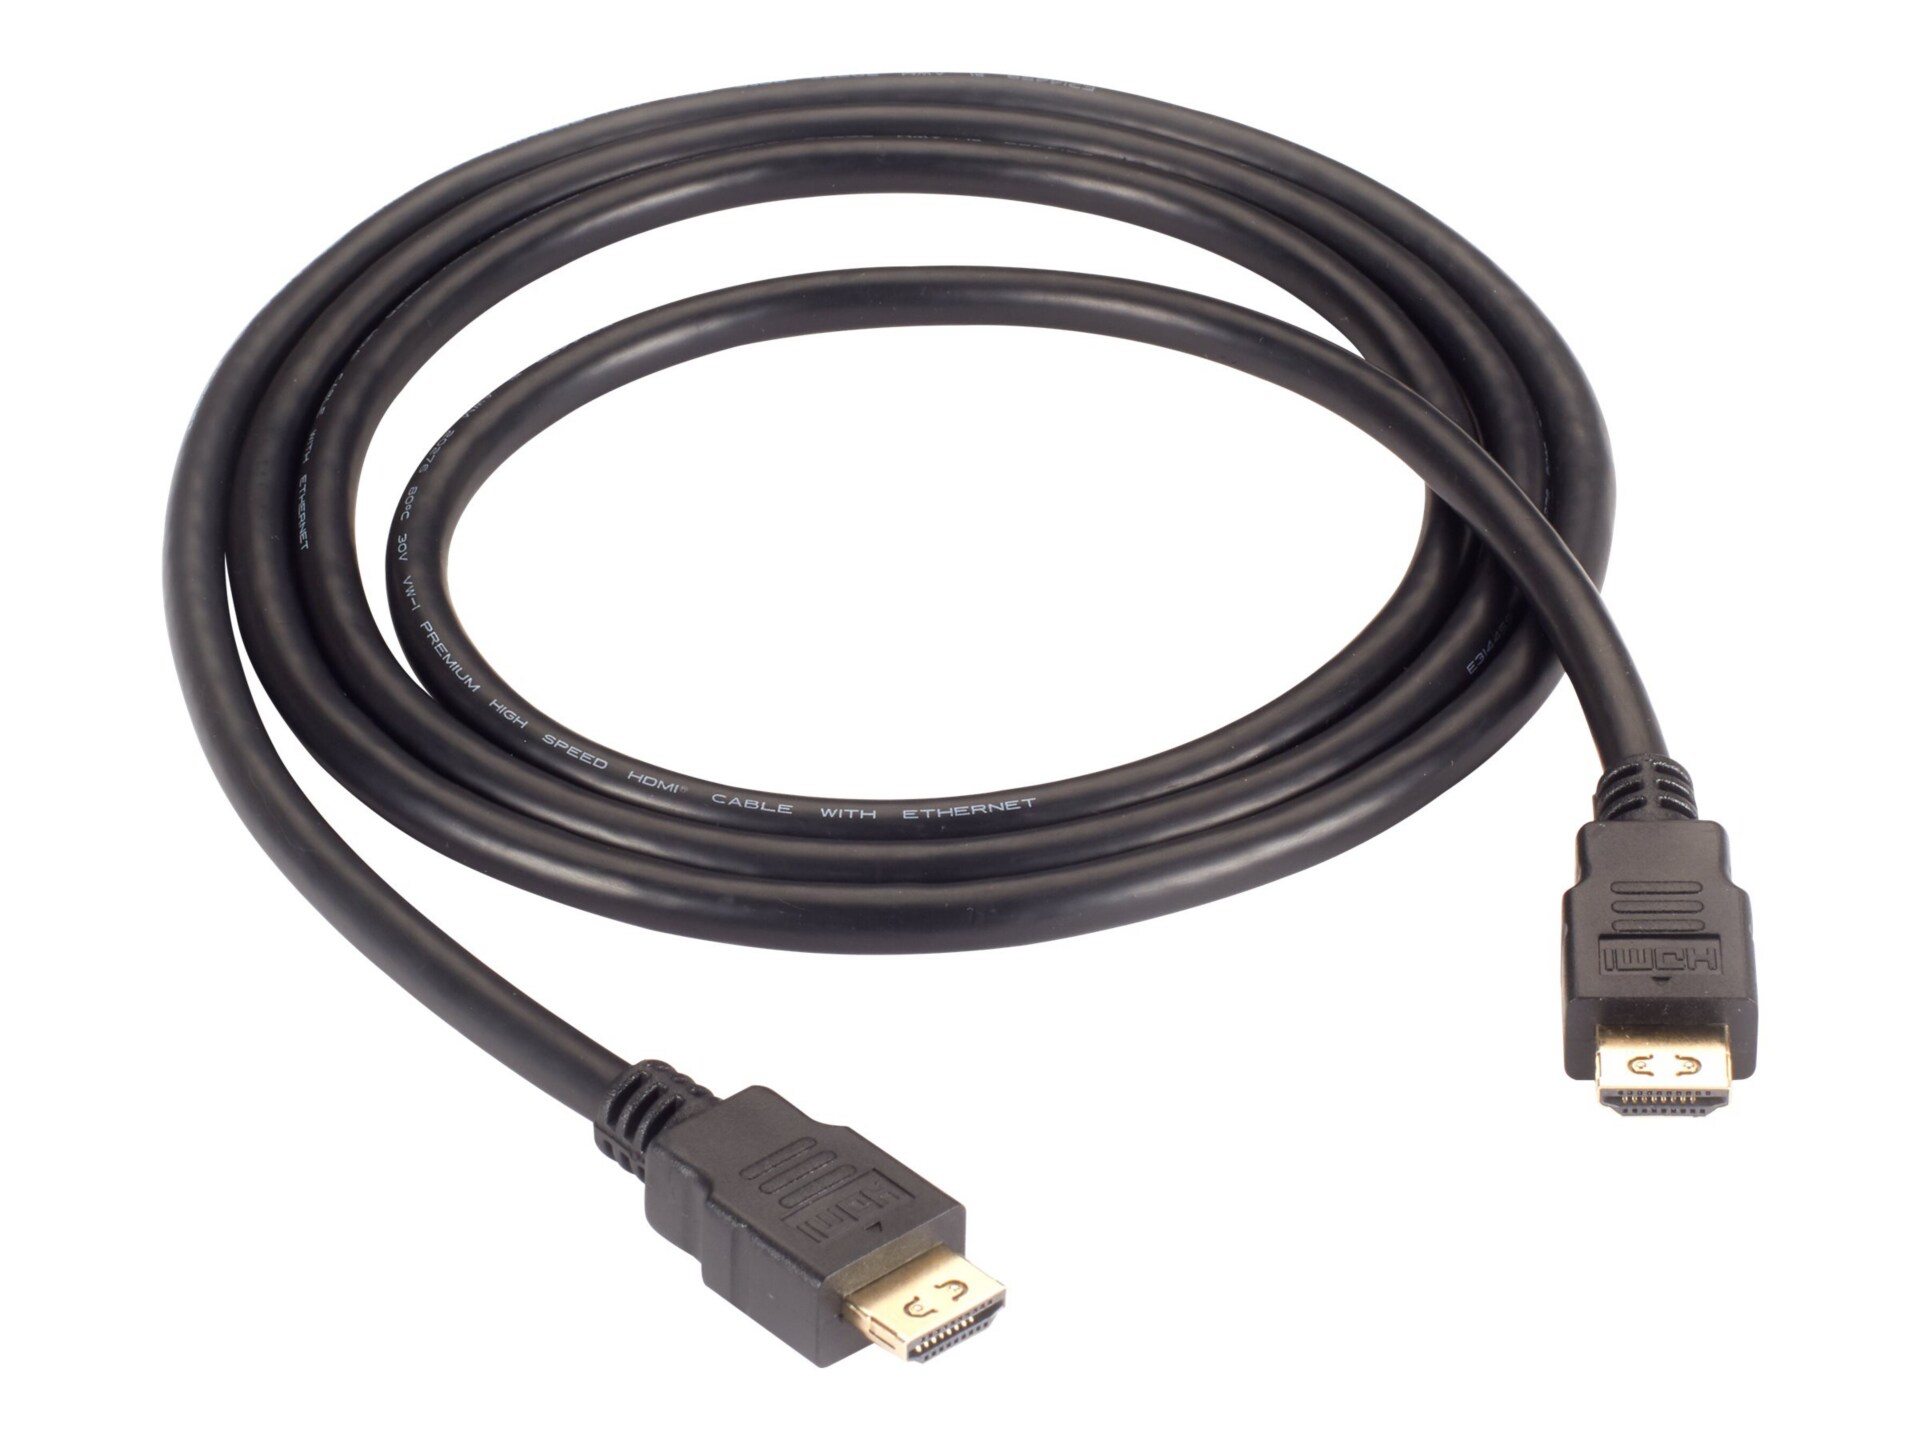 kandidatskole Robust Opmærksom Black Box VCB-HD2L Series HDMI cable with Ethernet - 6 ft - VCB-HD2L-006 -  Audio & Video Cables - CDW.com